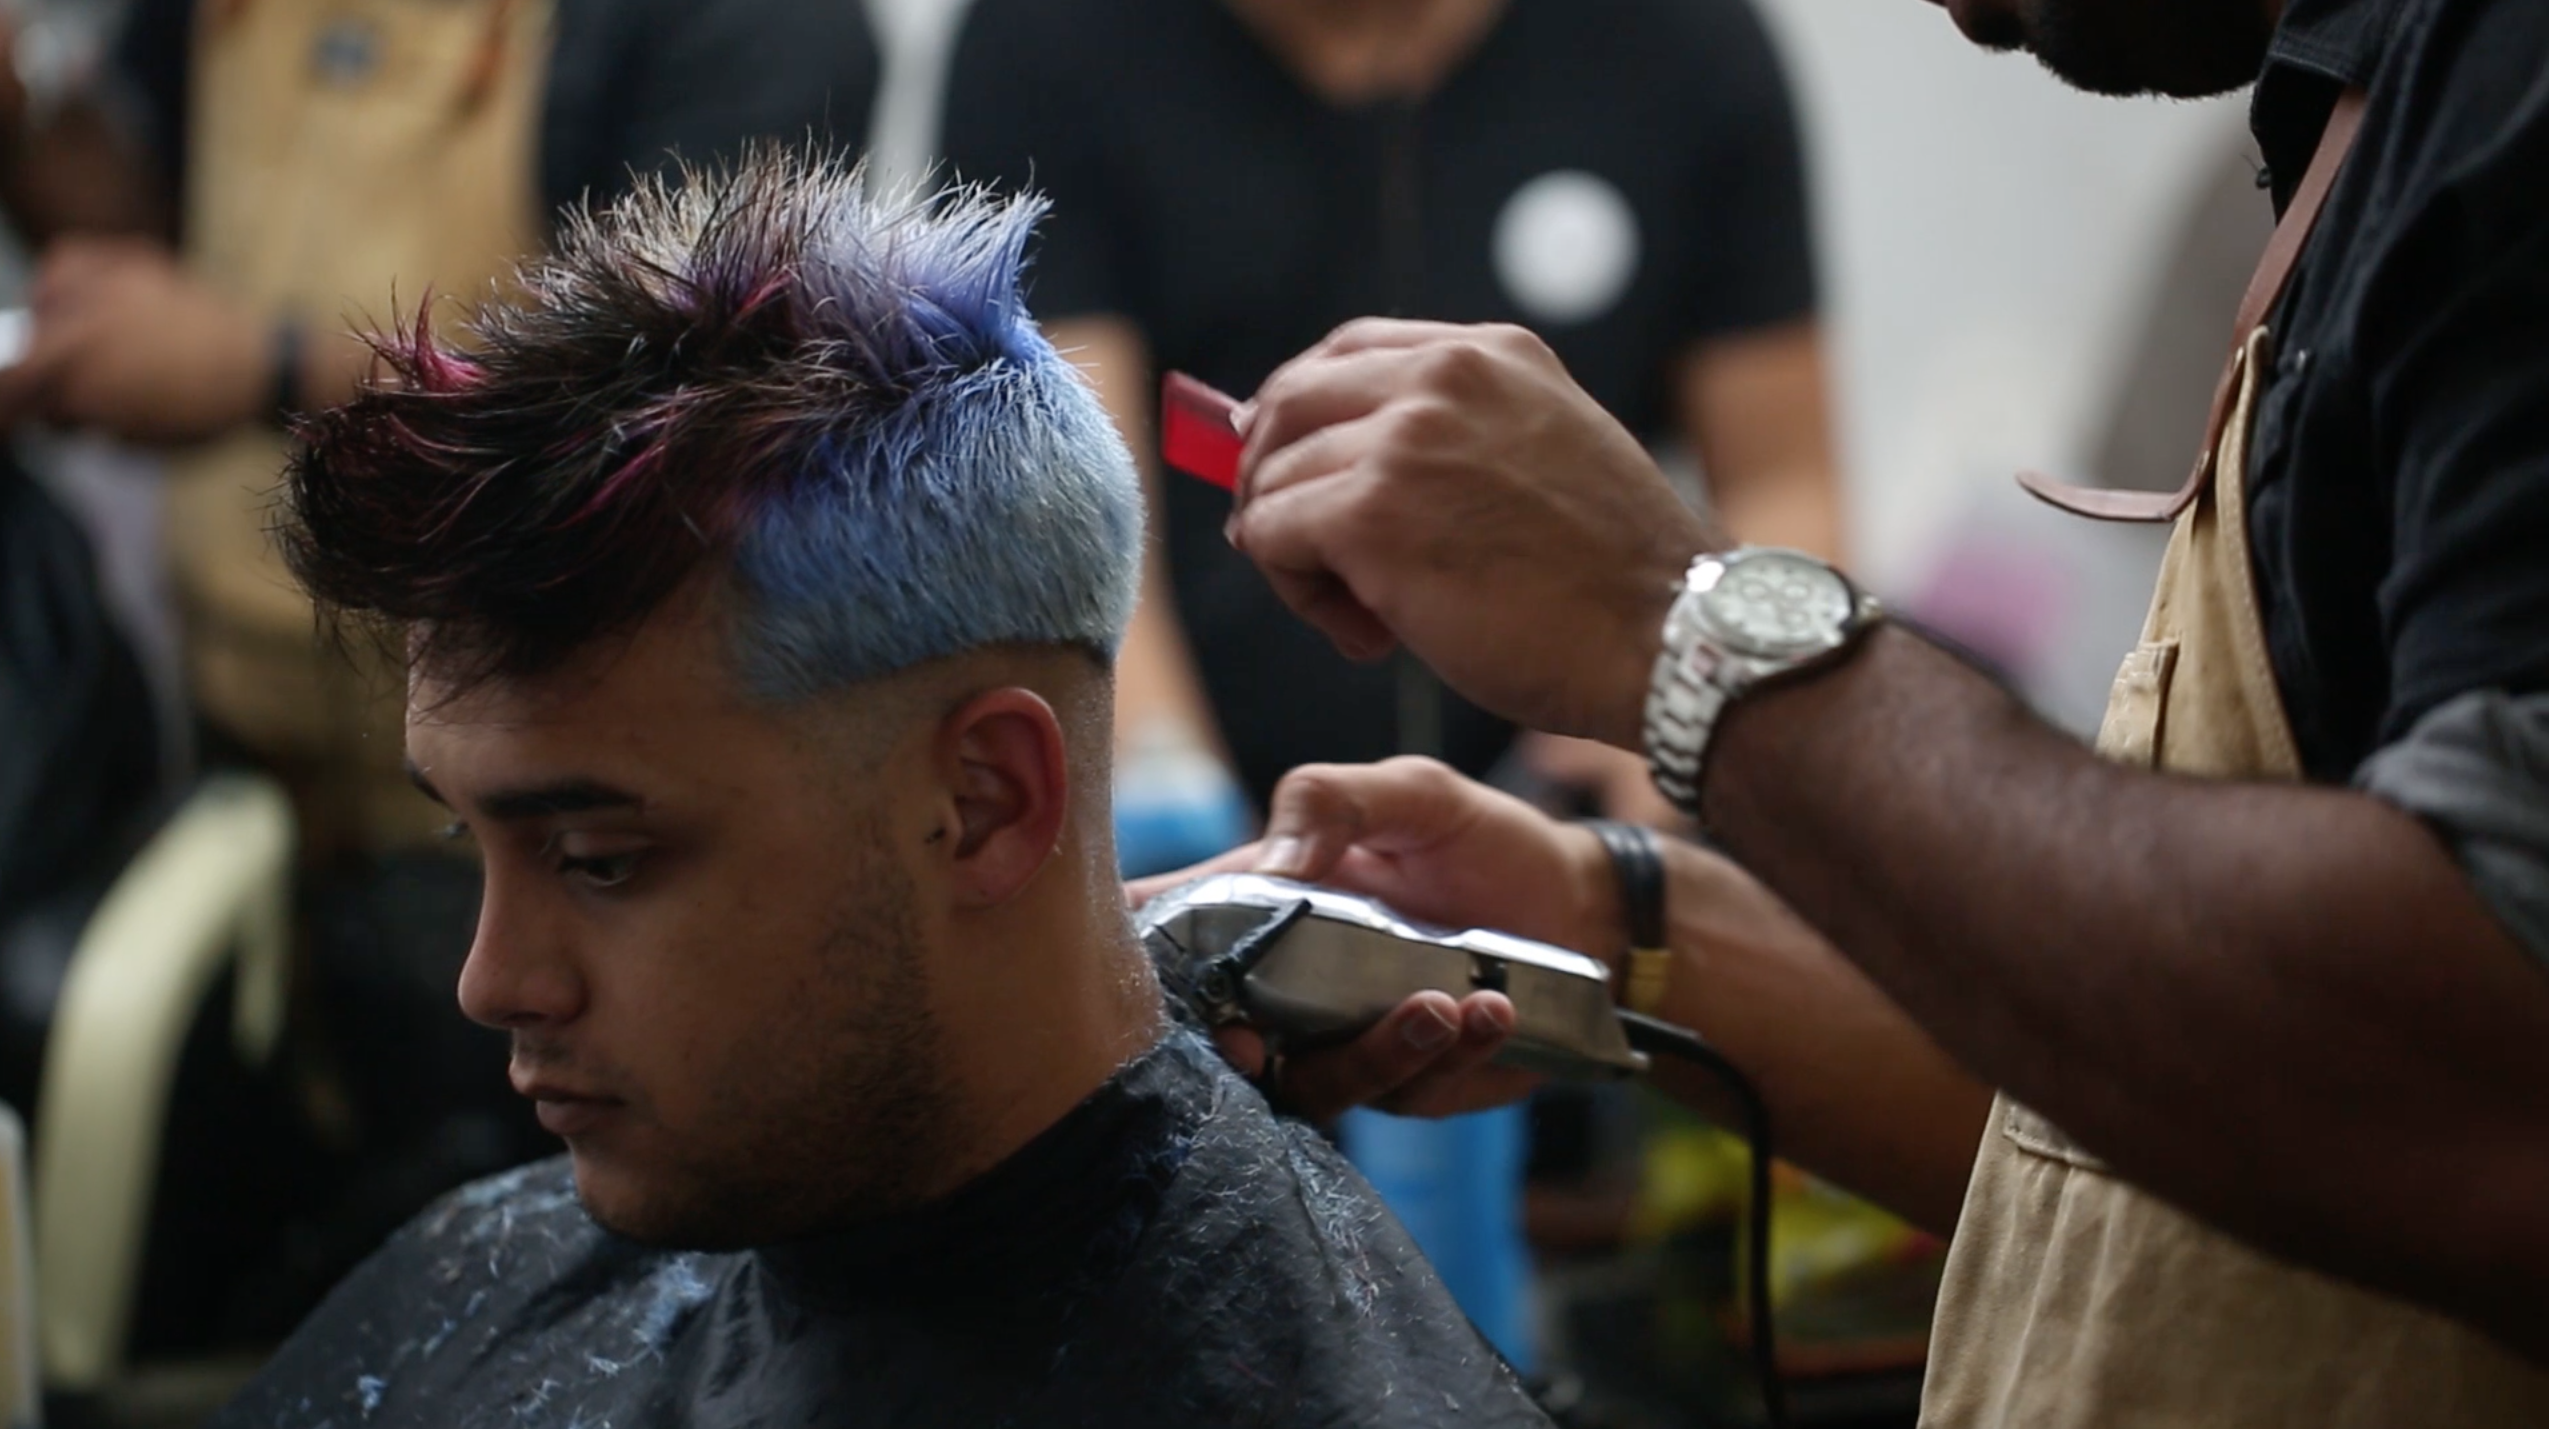 Cutting hair and cutting Communist ties in Cuba - UNC Media Hub